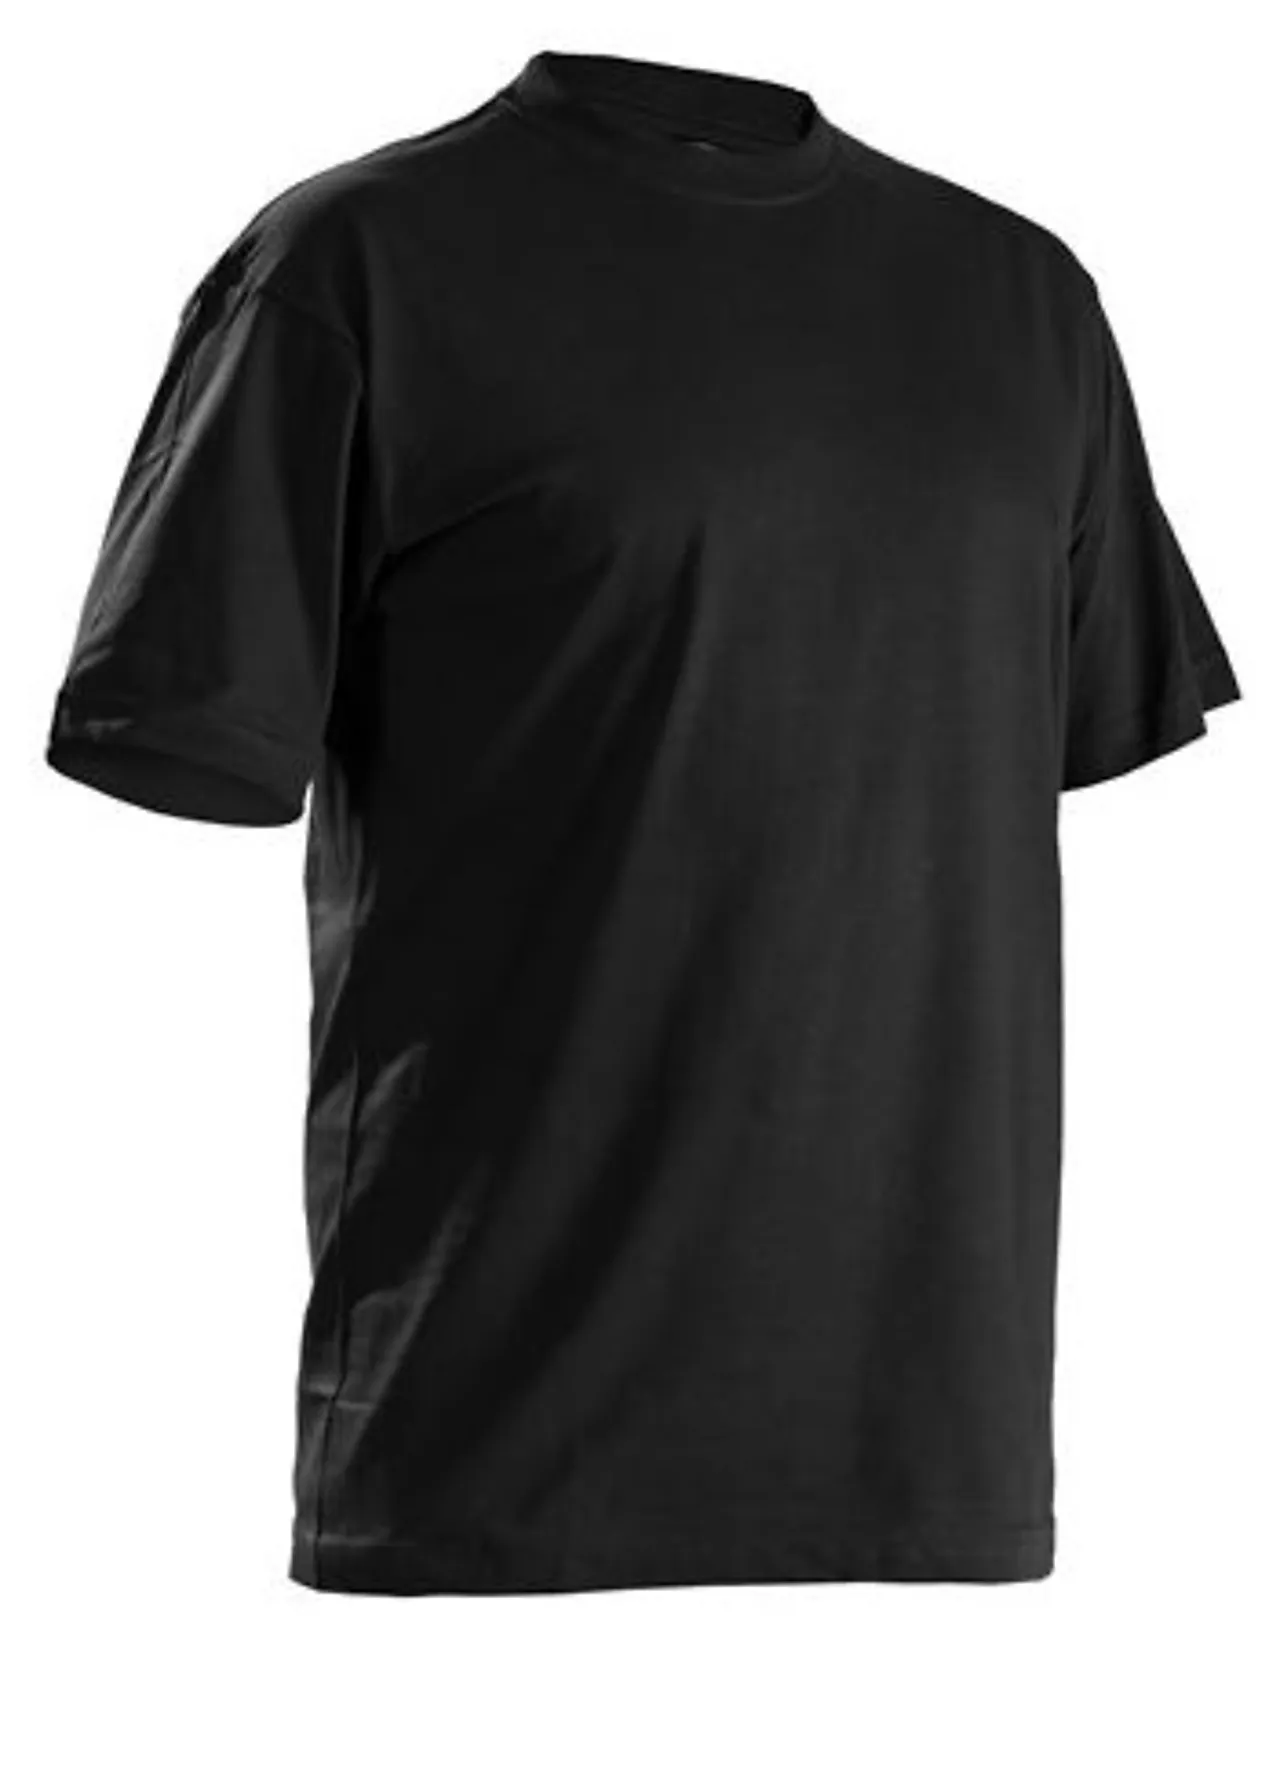 T-skjorte 5 pakk 332510429900xl 5 pakk svart null - null - 3 - Miniatyr